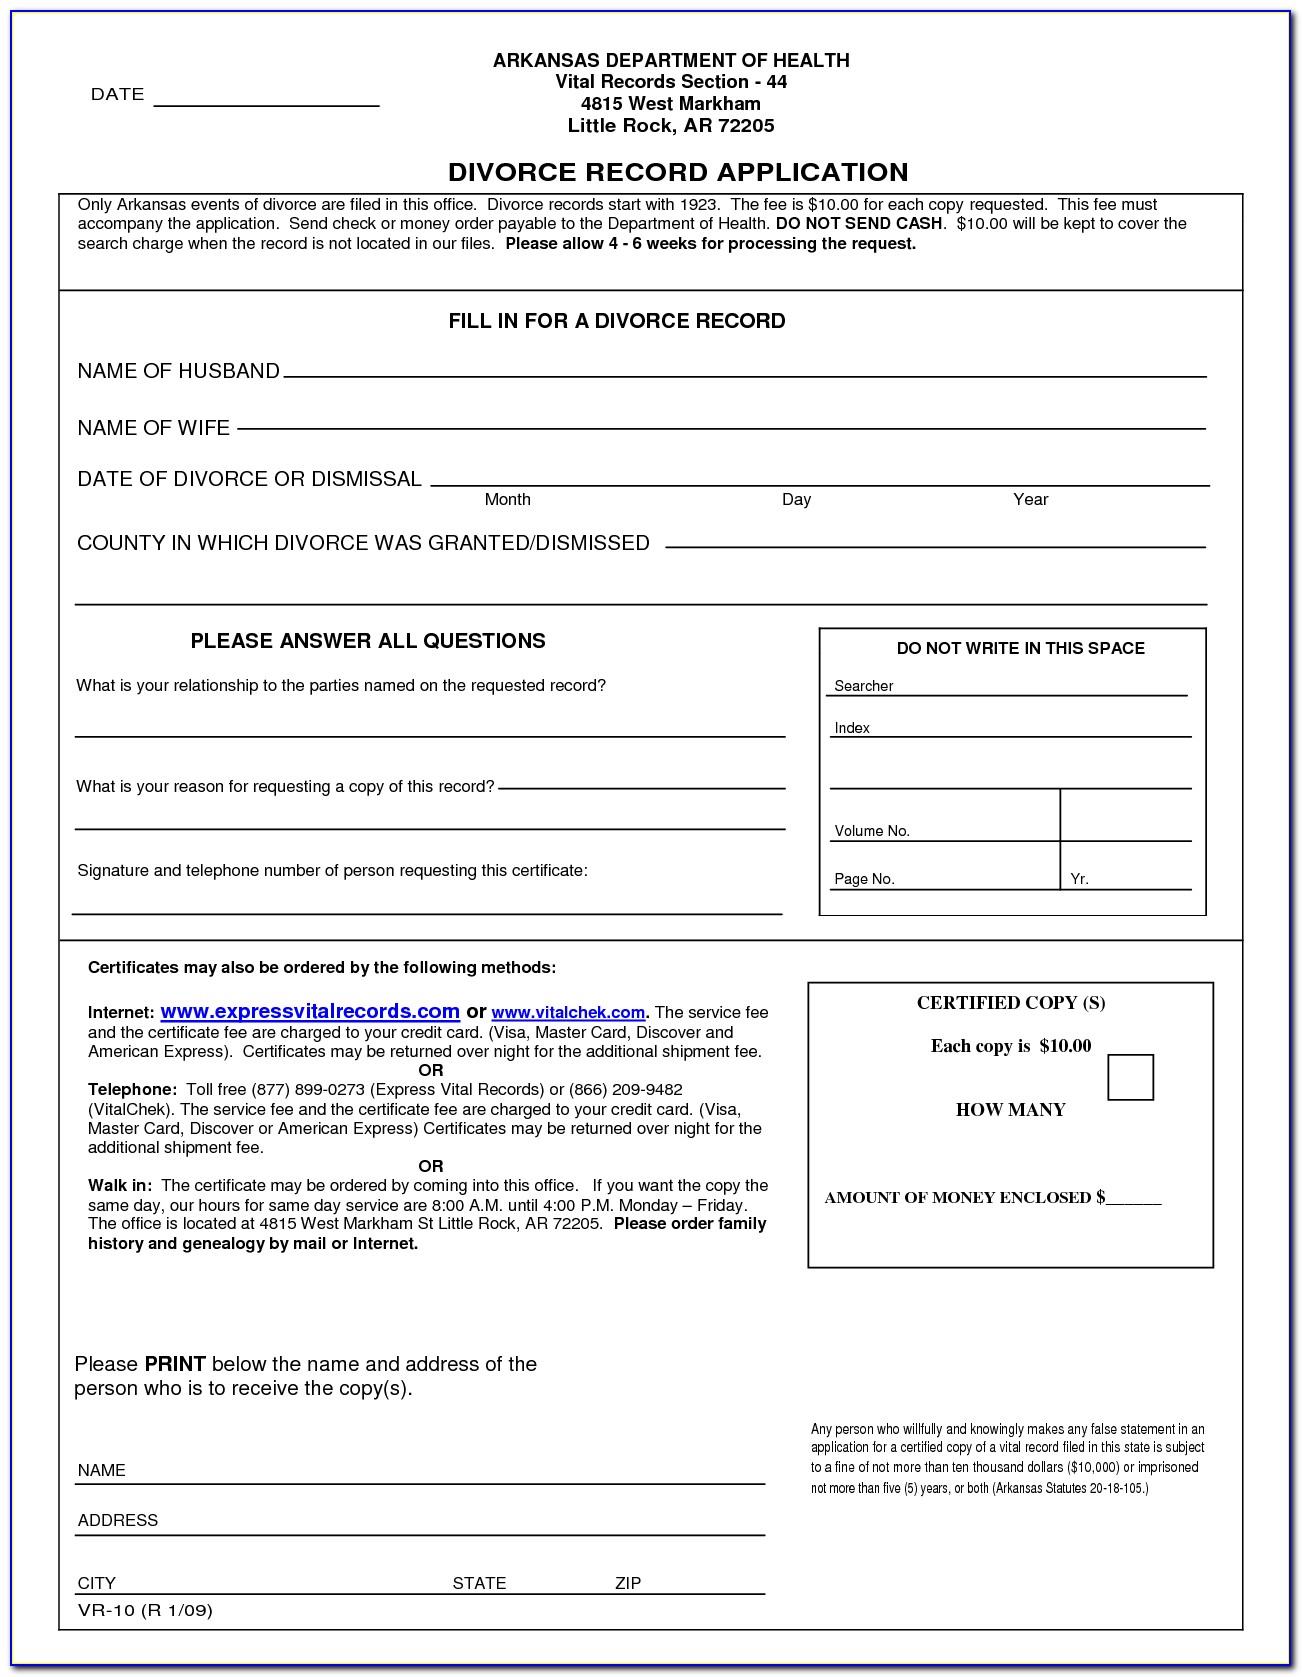 free-printable-arkansas-divorce-forms-form-resume-examples-w9507ekdor